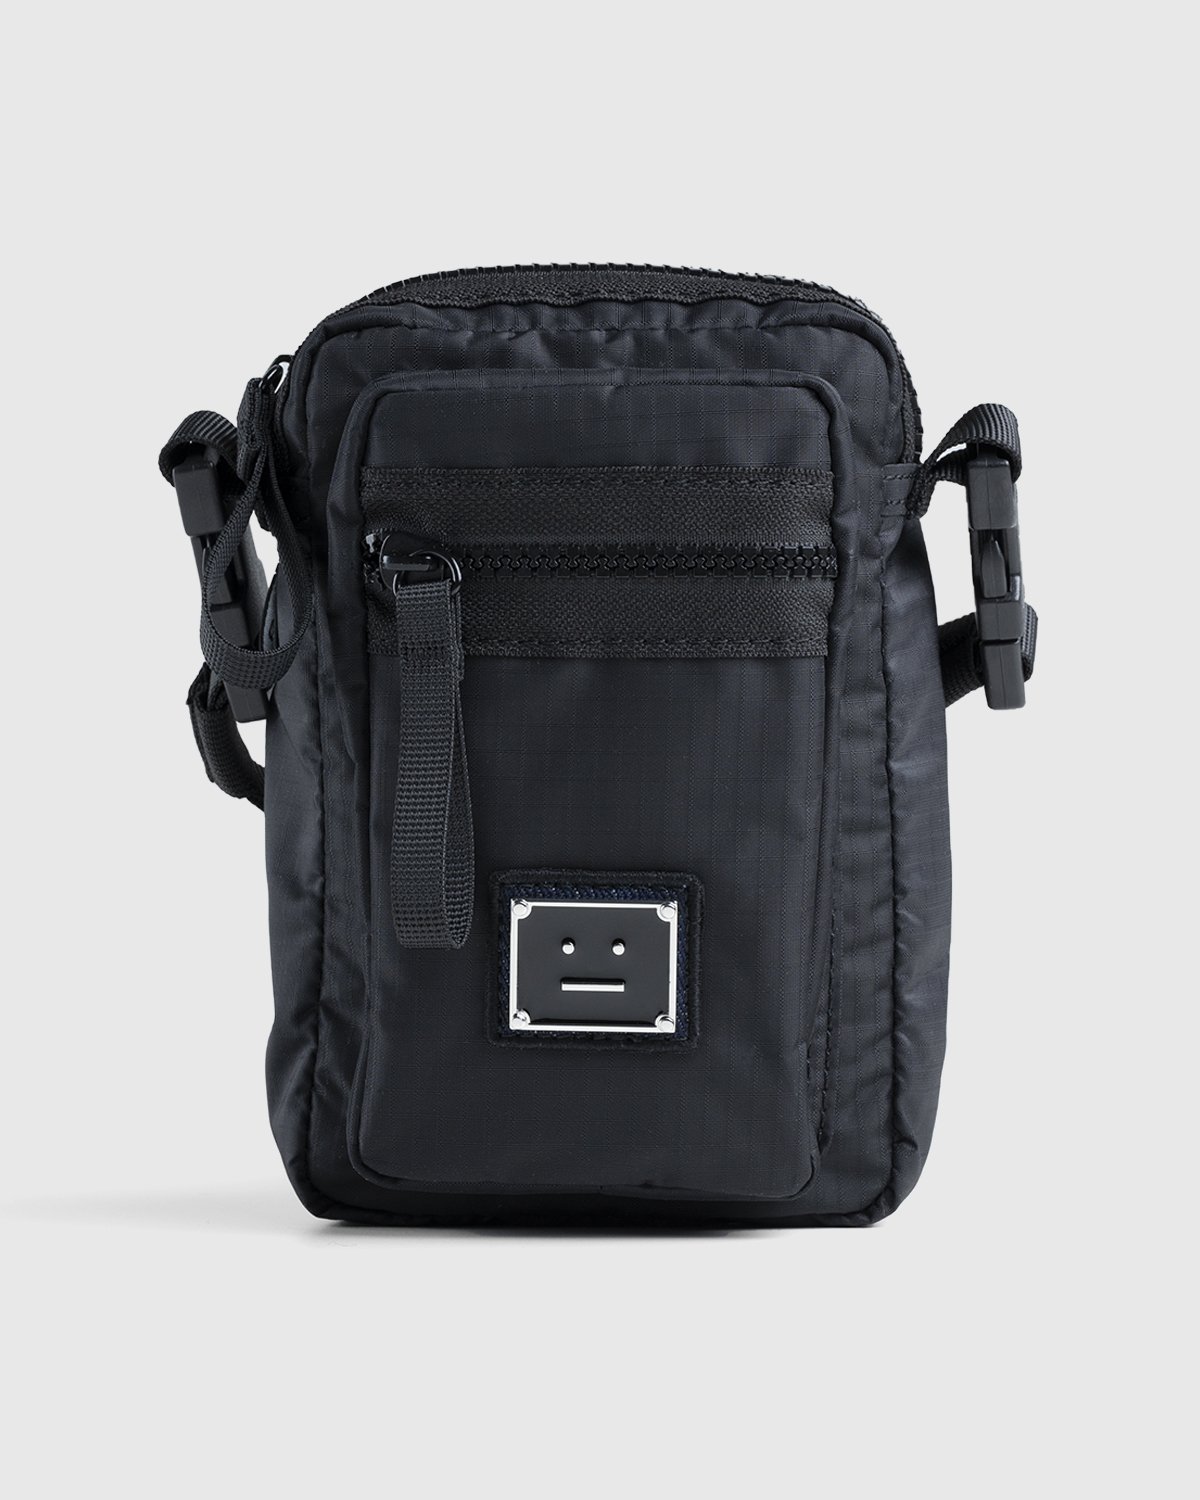 Acne Studios - Crossbody Face Bag Black - Accessories - Black - Image 2